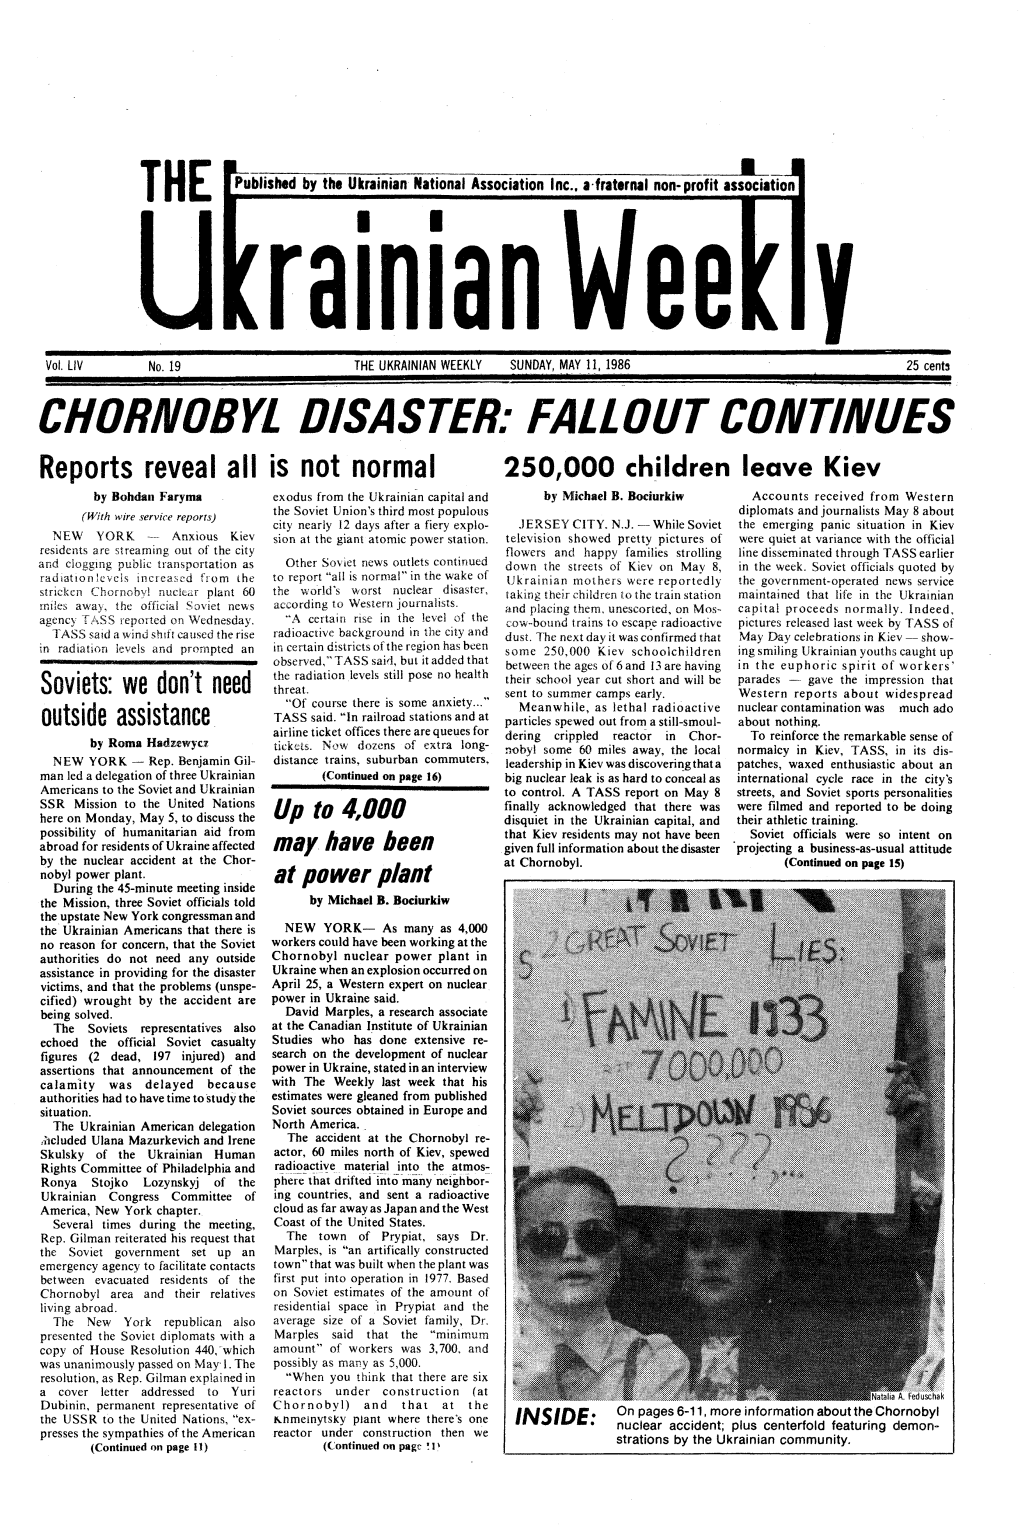 The Ukrainian Weekly 1986, No.19